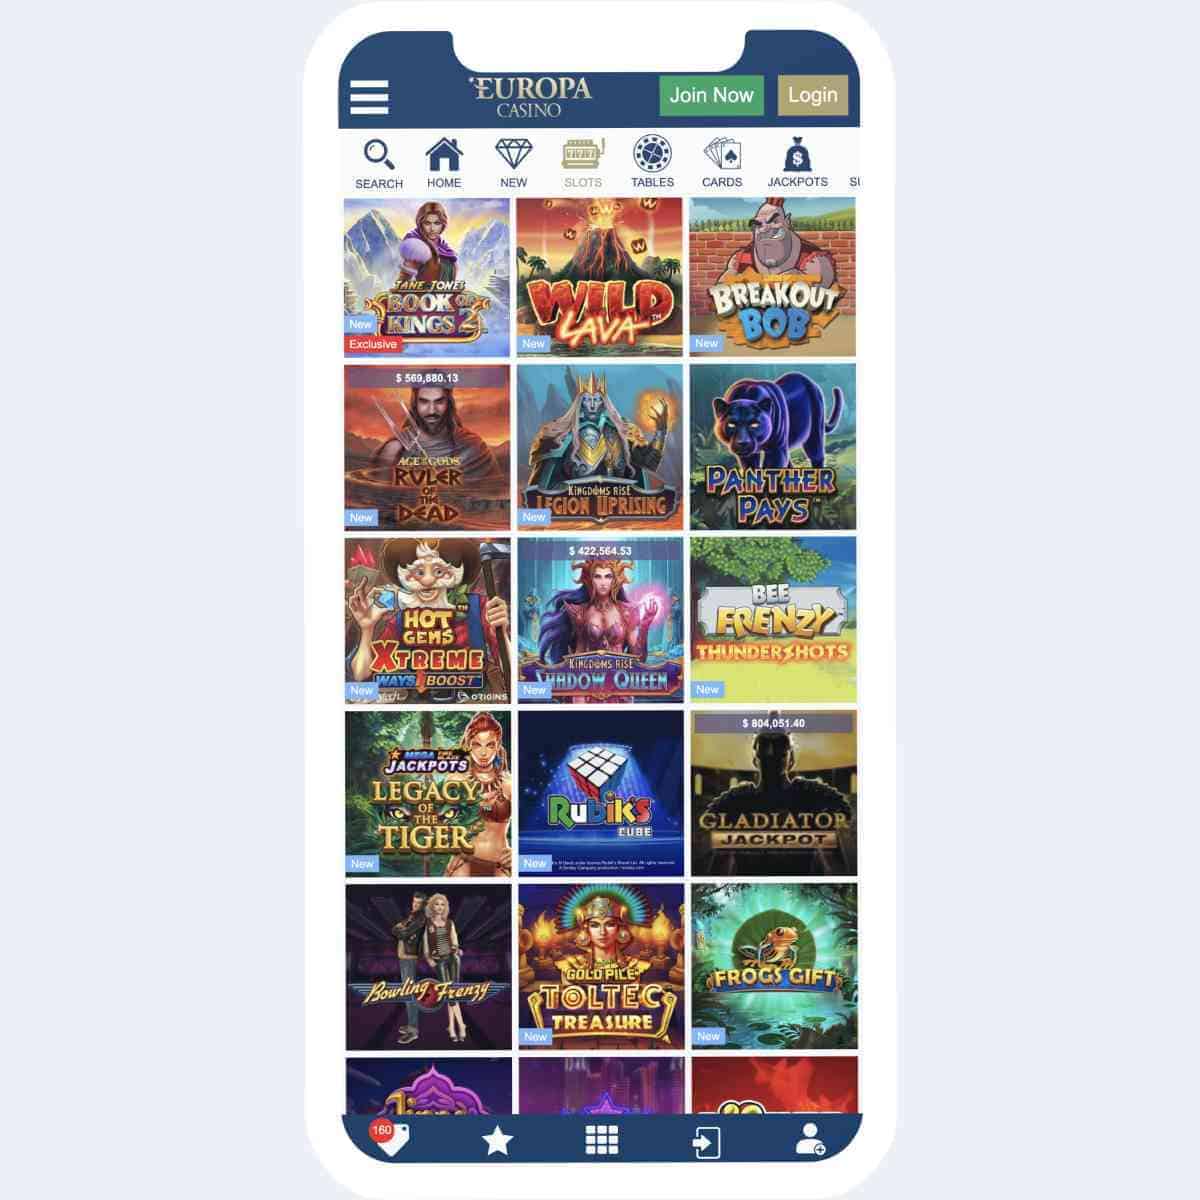 europa casino games mobile